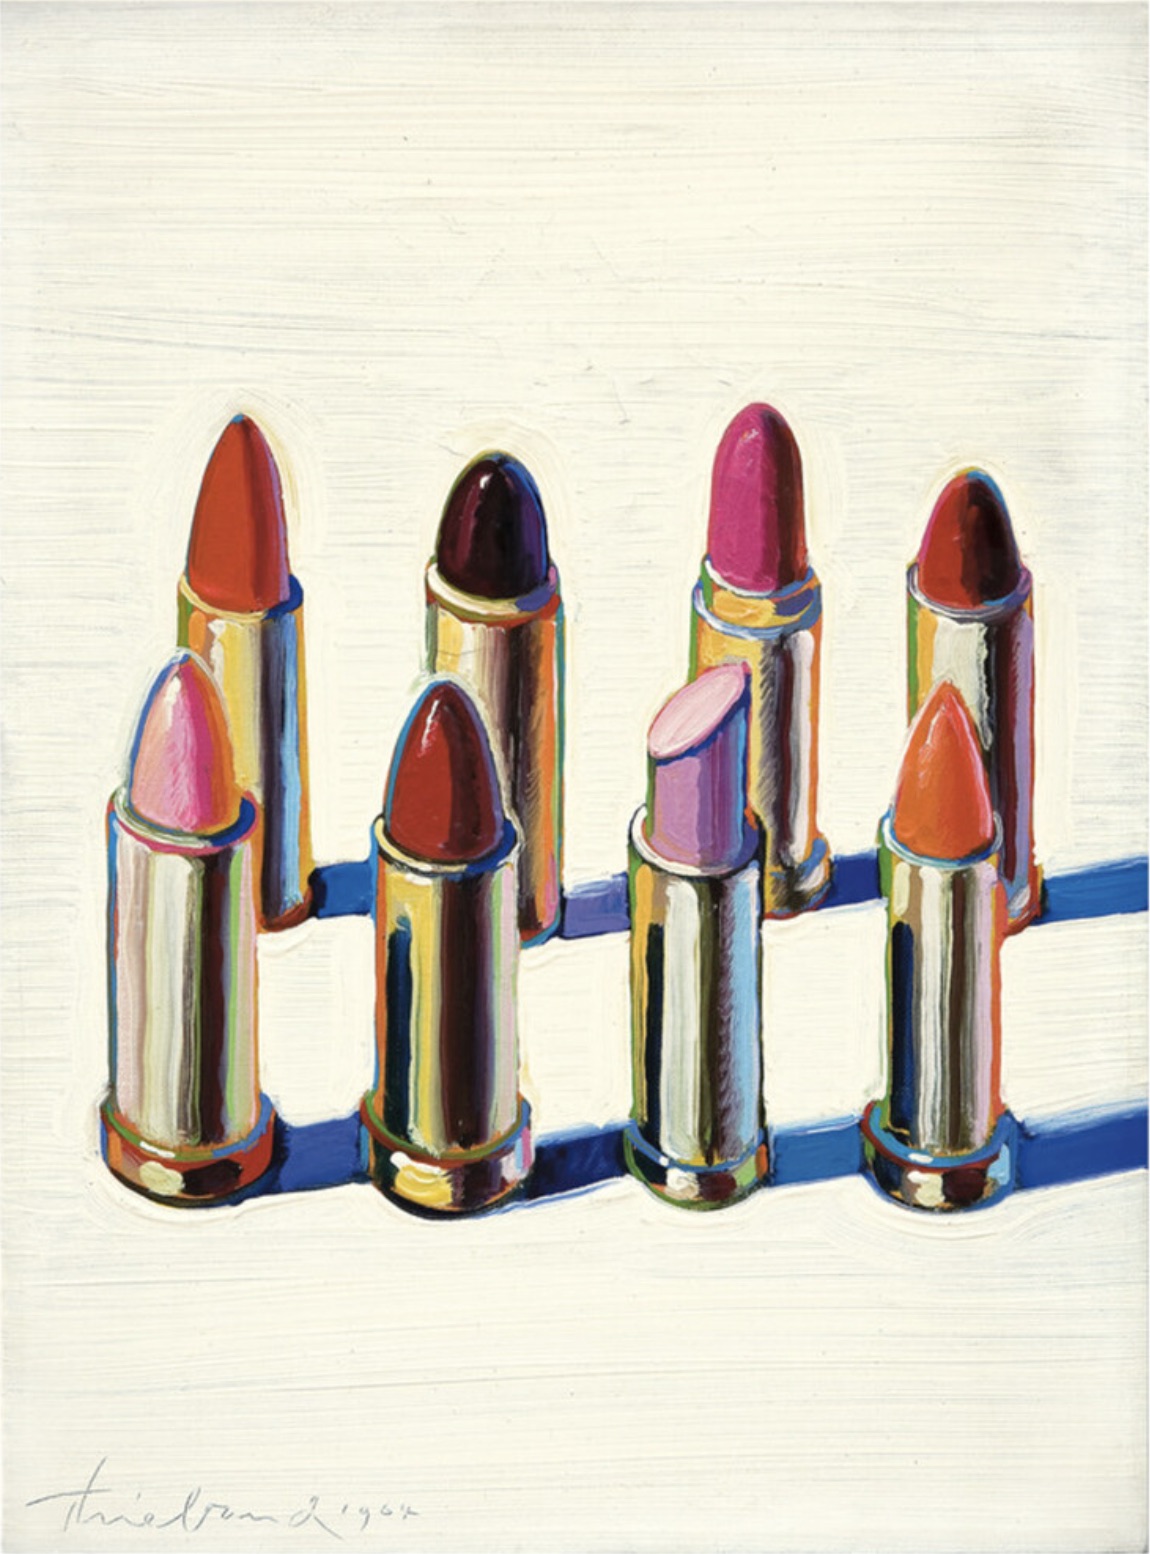 Wayne Thiebaud "Lipsticks, 1964" Offset Lithograph